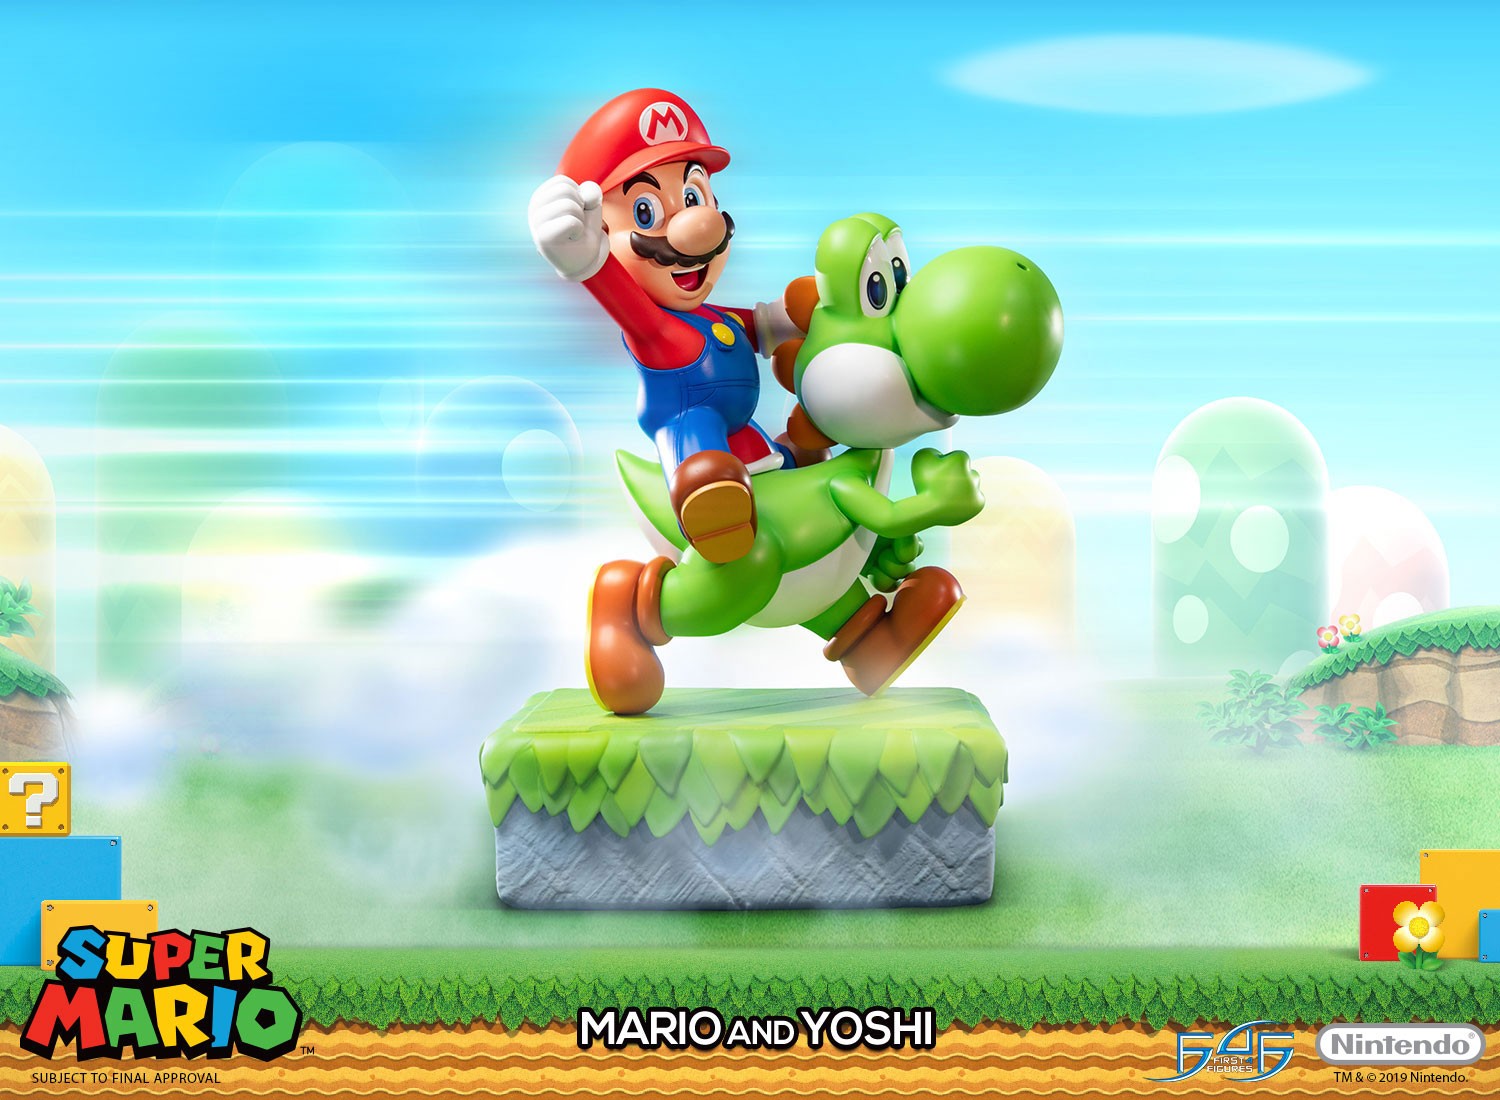 Super Mario – Mario and Yoshi Standard Edition